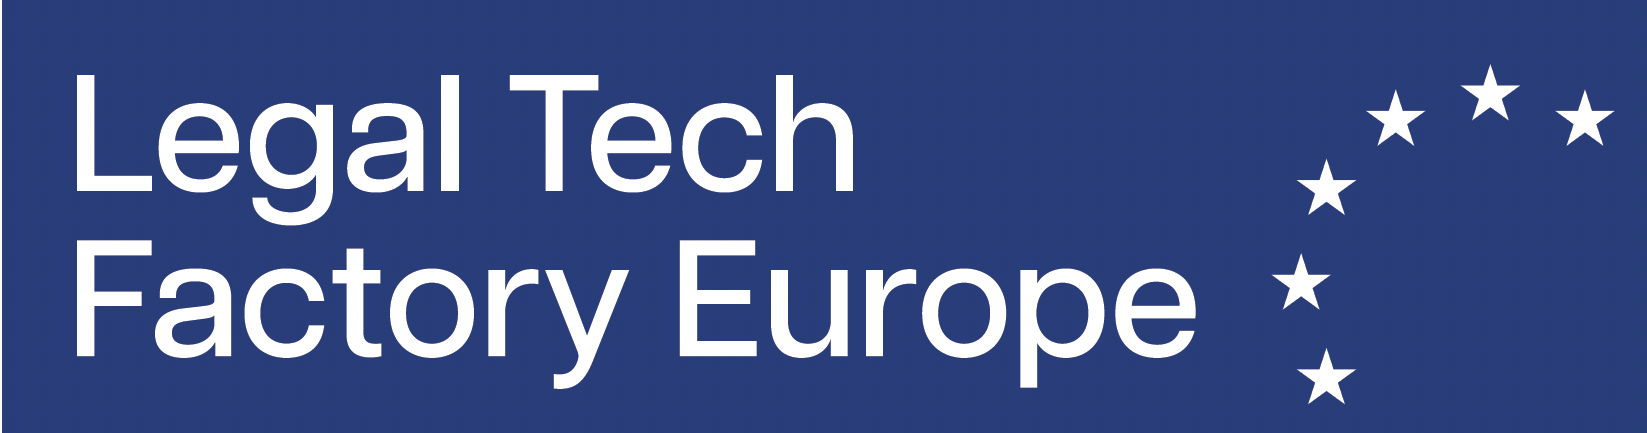 Legal Tech Factory Europe